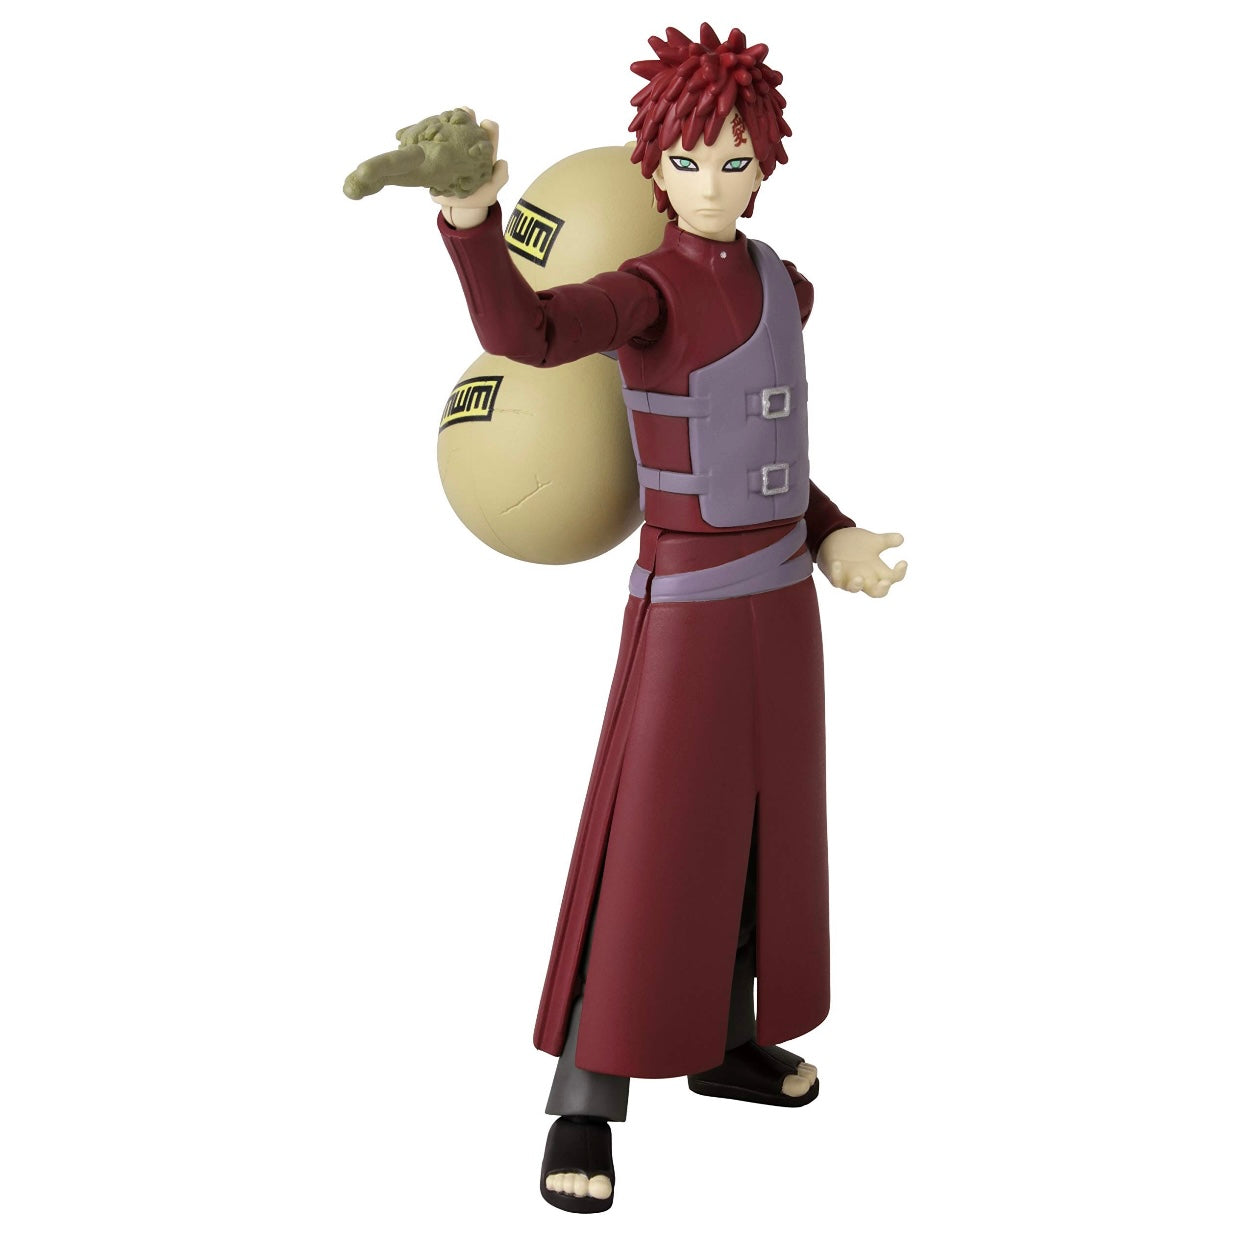 Anime Heroes Naruto Shippuden Gaara 6.5" Action Figure